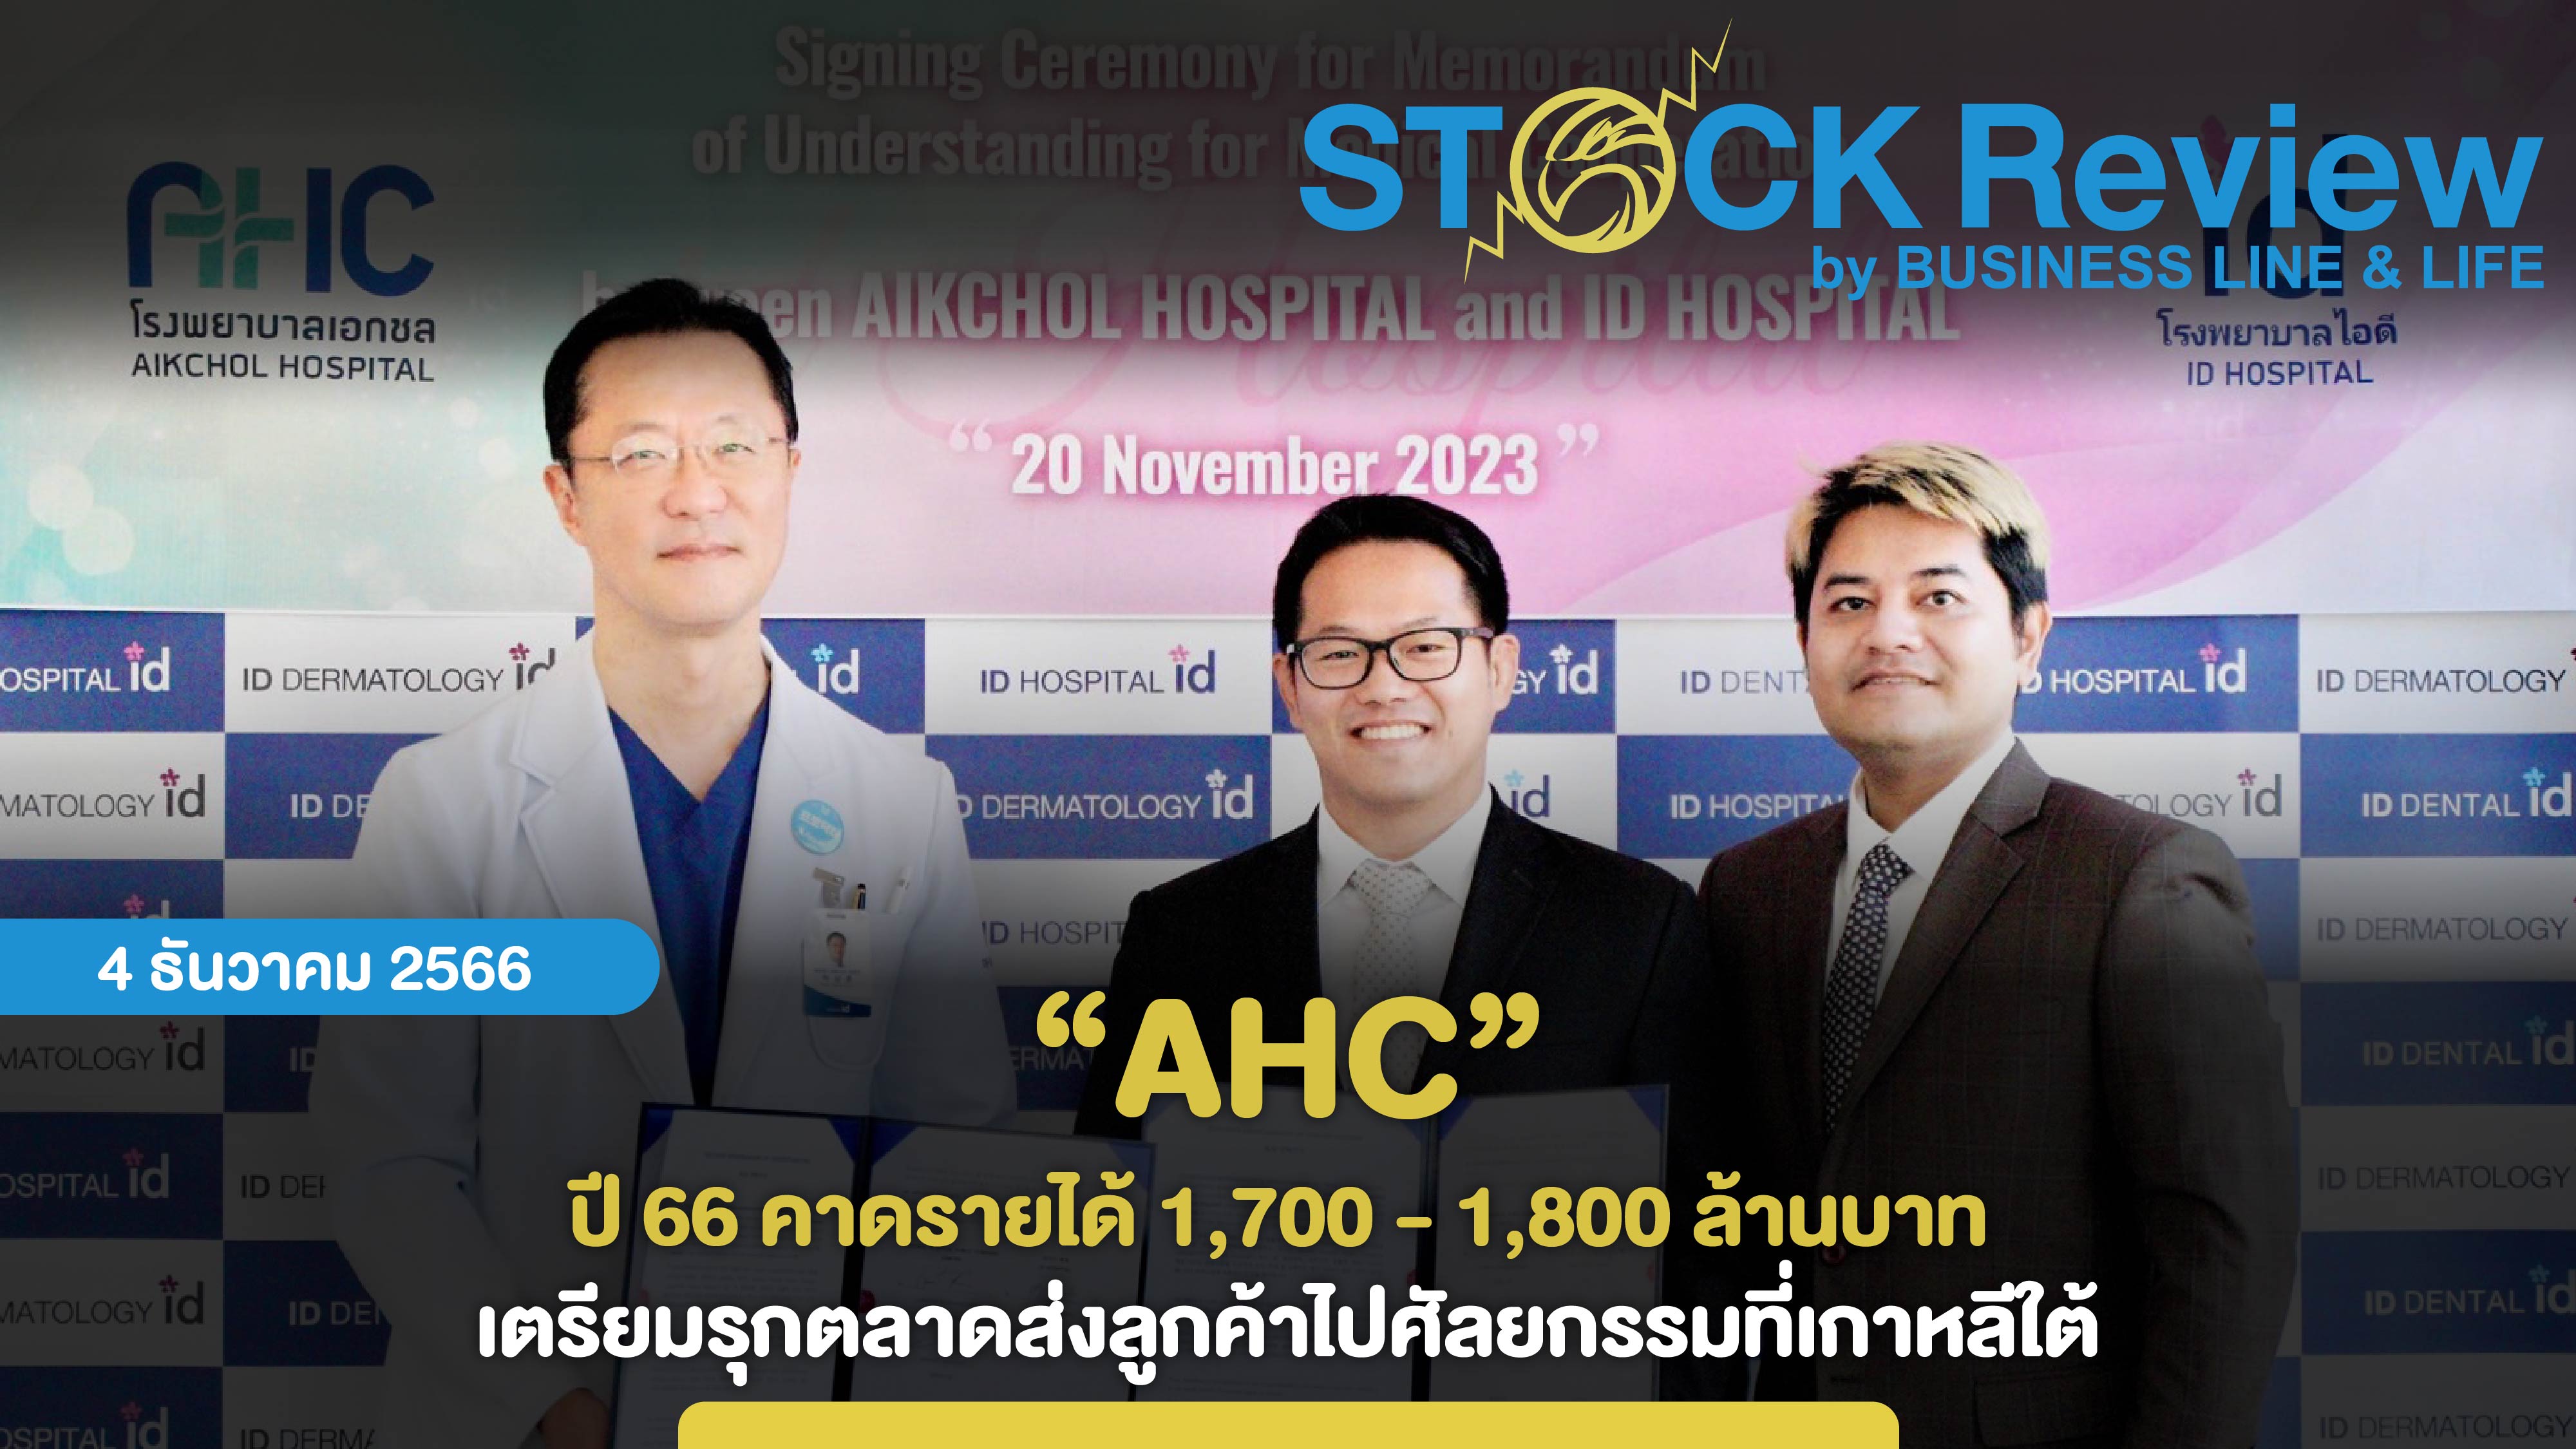 AHC ปี 66 คาดรายได้ 1.7 - 1.8 พันล้านบาท เตรียมรุกตลาดส่งลูกค้าไปศัลยกรรมที่เกาหลีใต้